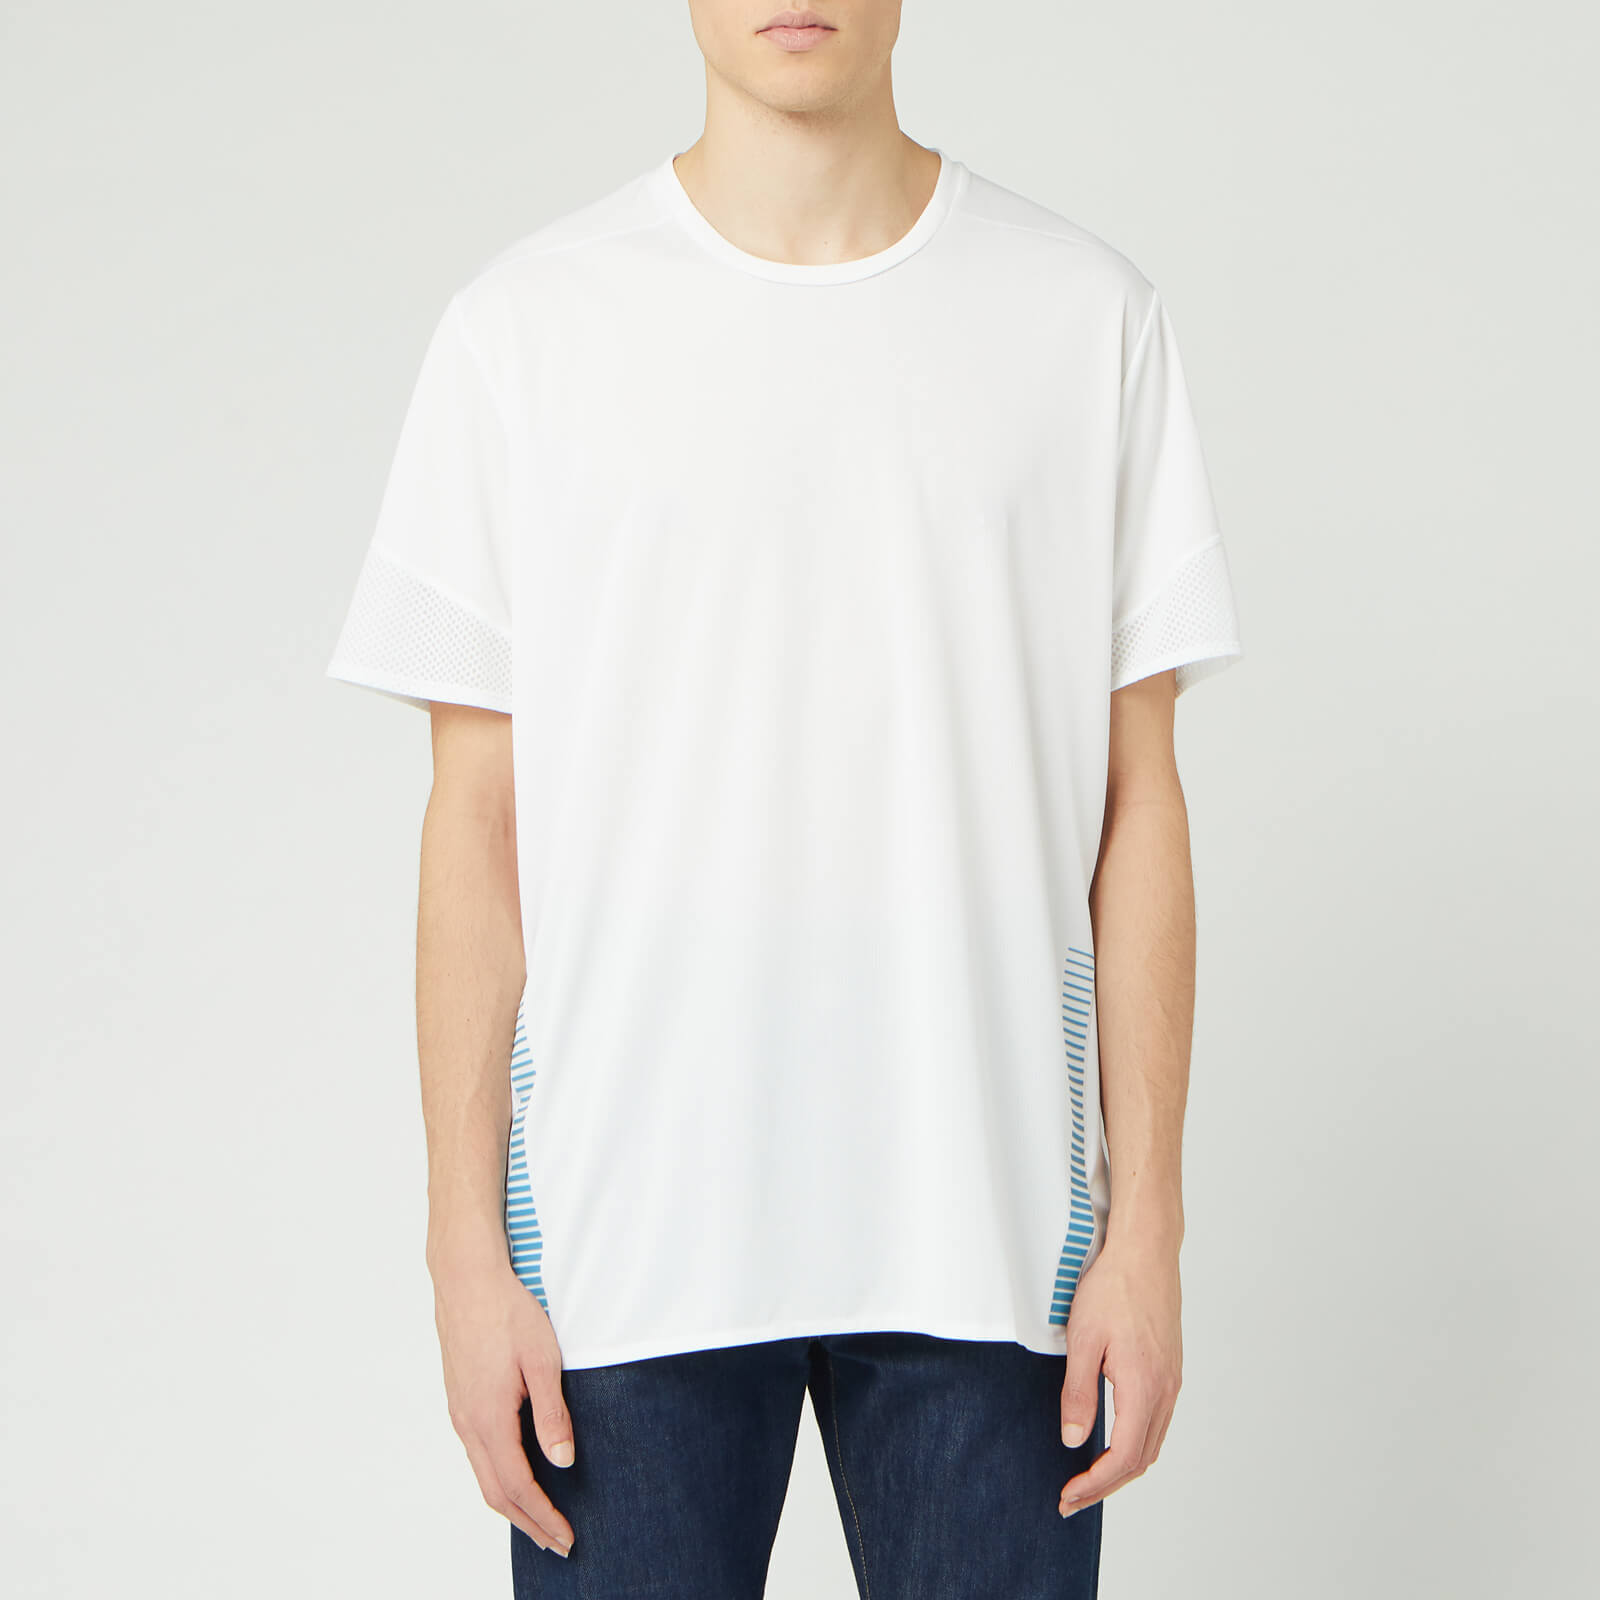 adidas Men's 25/7 Runner Short Sleeve T-Shirt - White - XL